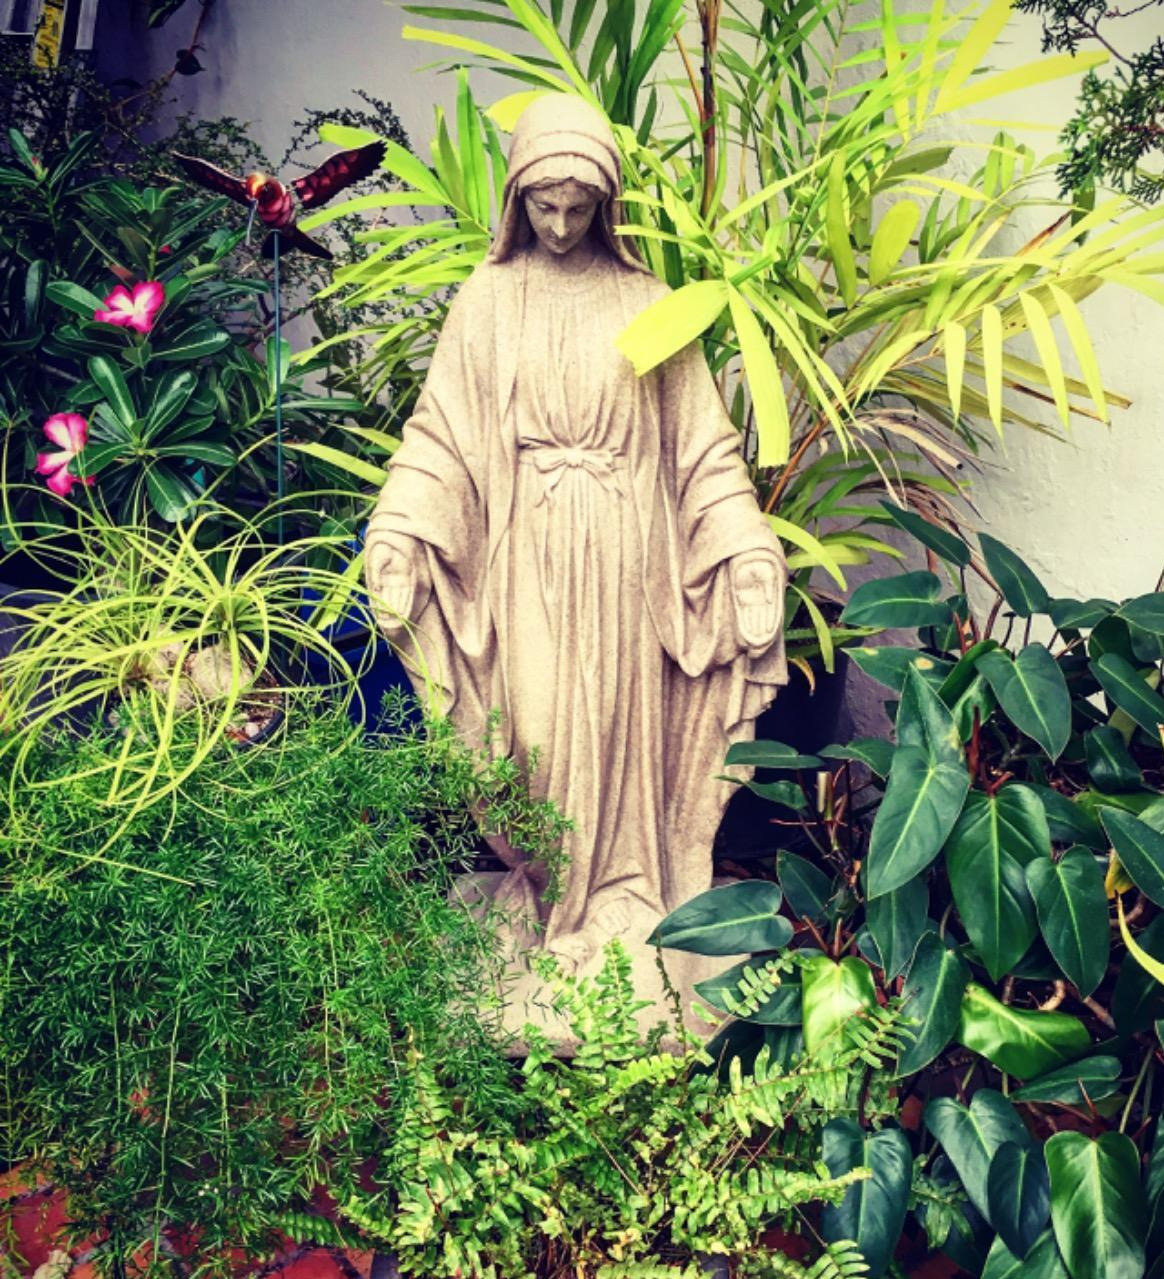 34 inch Virgin Mary Garden Statue Christian Outdoor Figurine Sculpture Decor